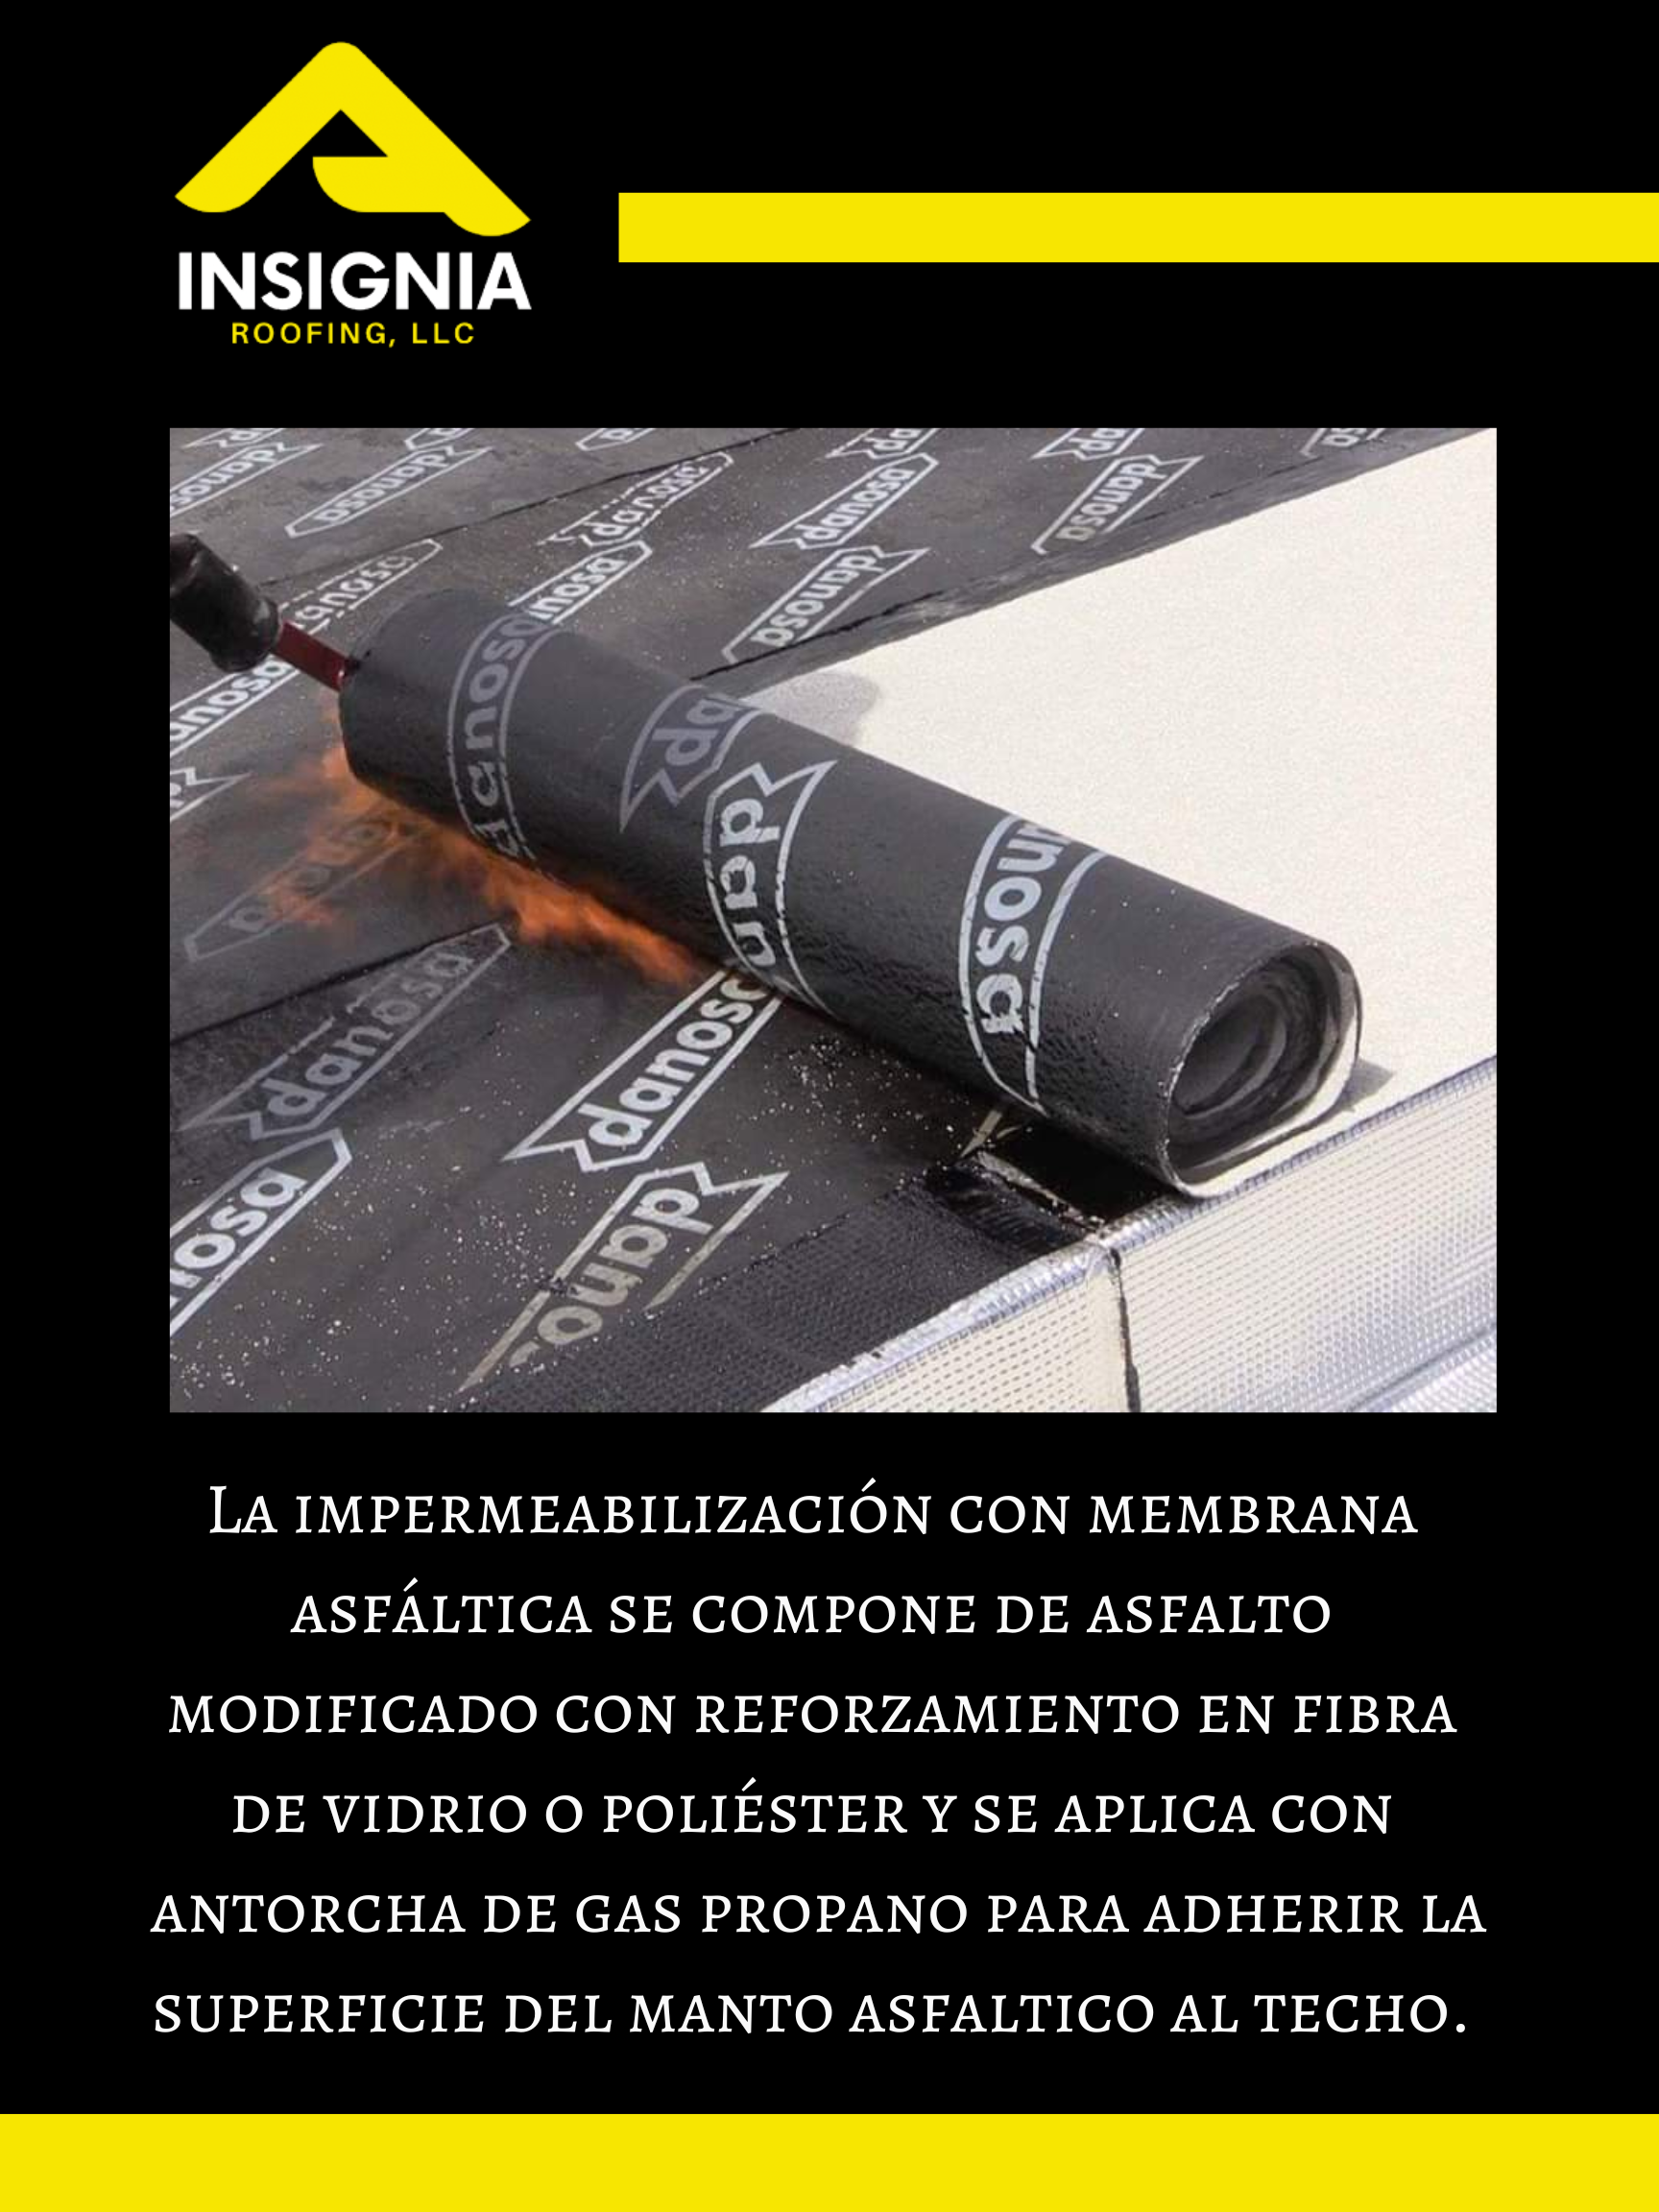 Insignia Roofing, LLC - Foto 6.0 (Servicios)